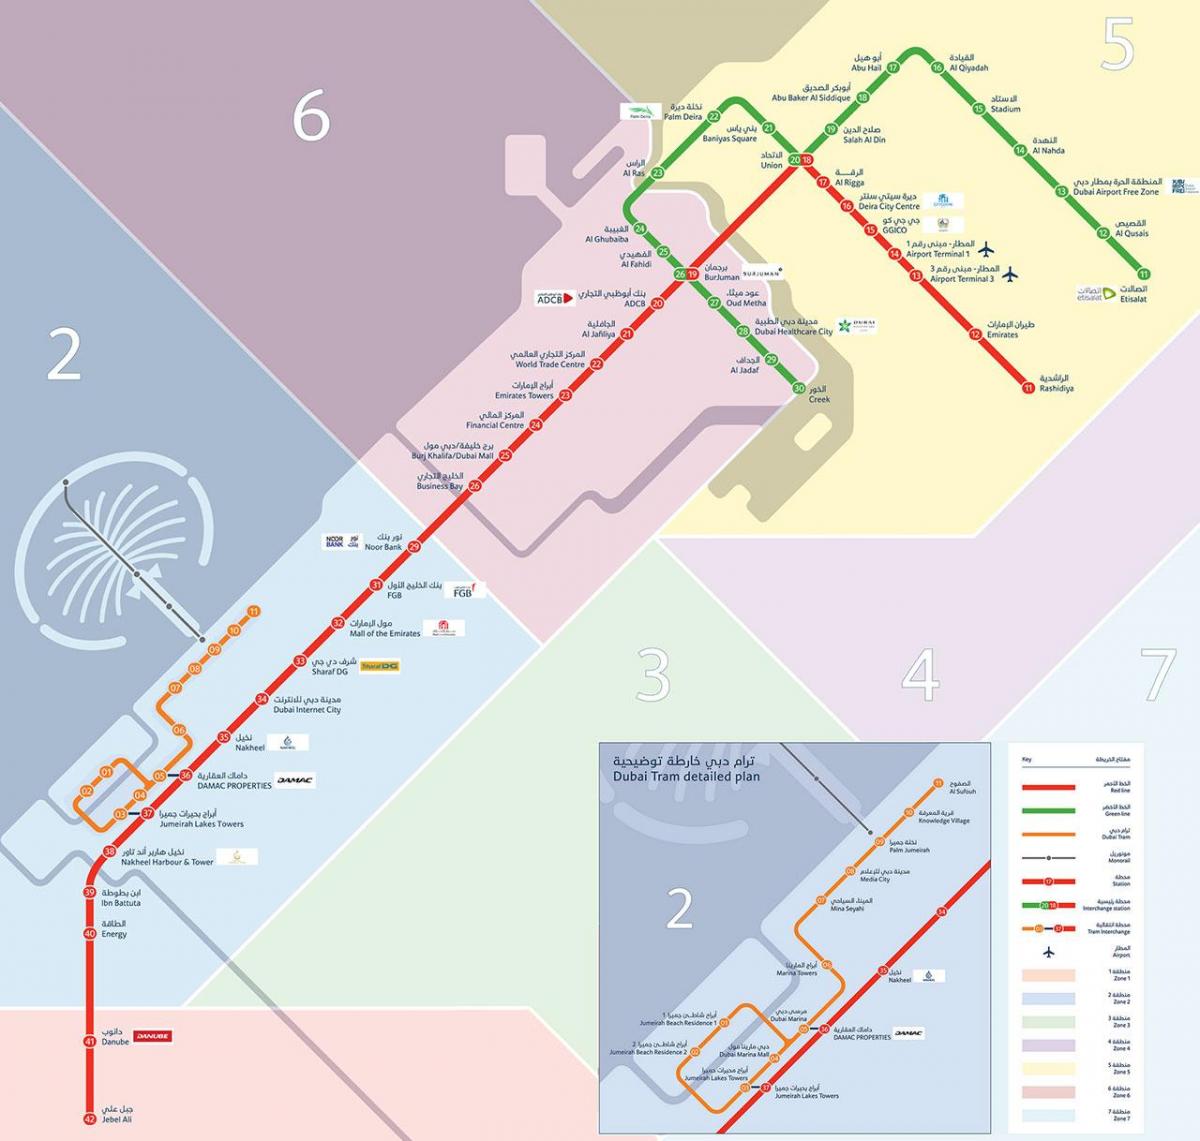 kort over Dubai metro